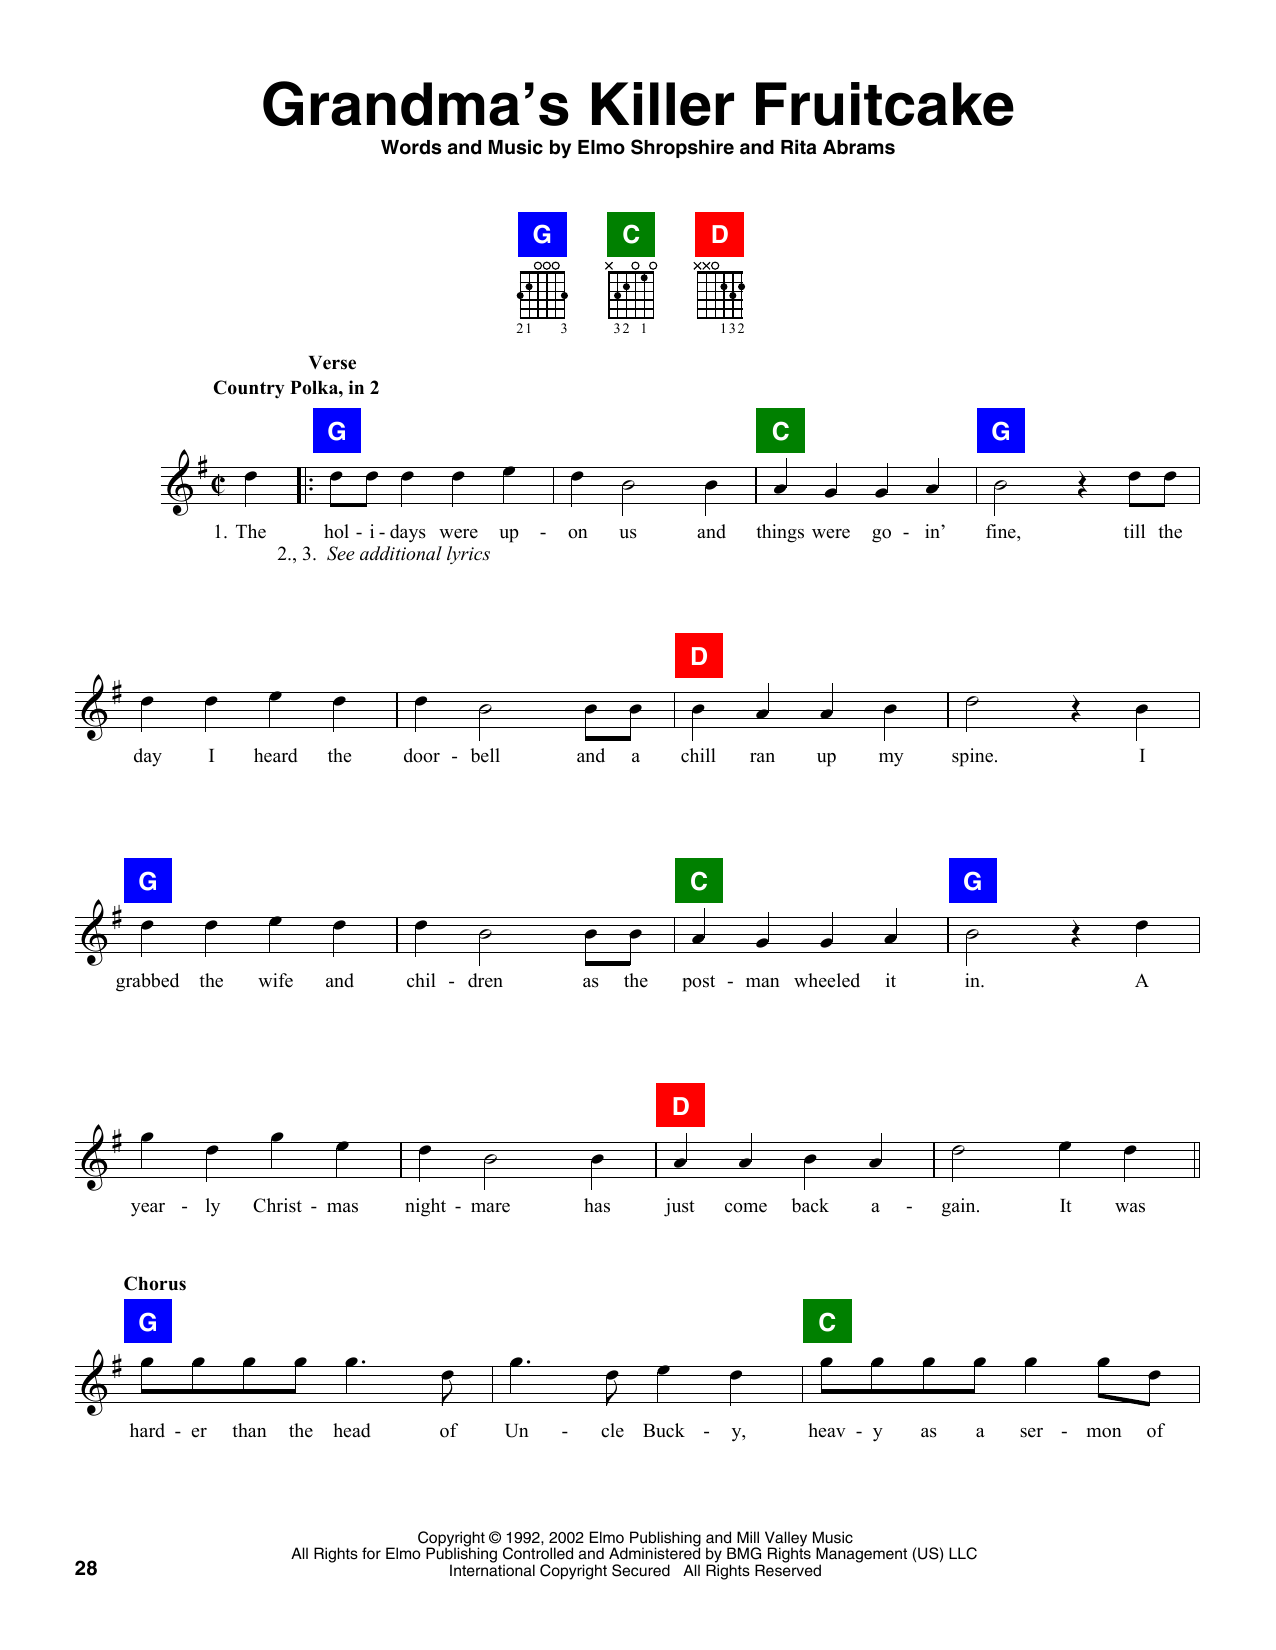 Download Elmo Shropshire Grandma's Killer Fruitcake Sheet Music and learn how to play Trombone PDF digital score in minutes